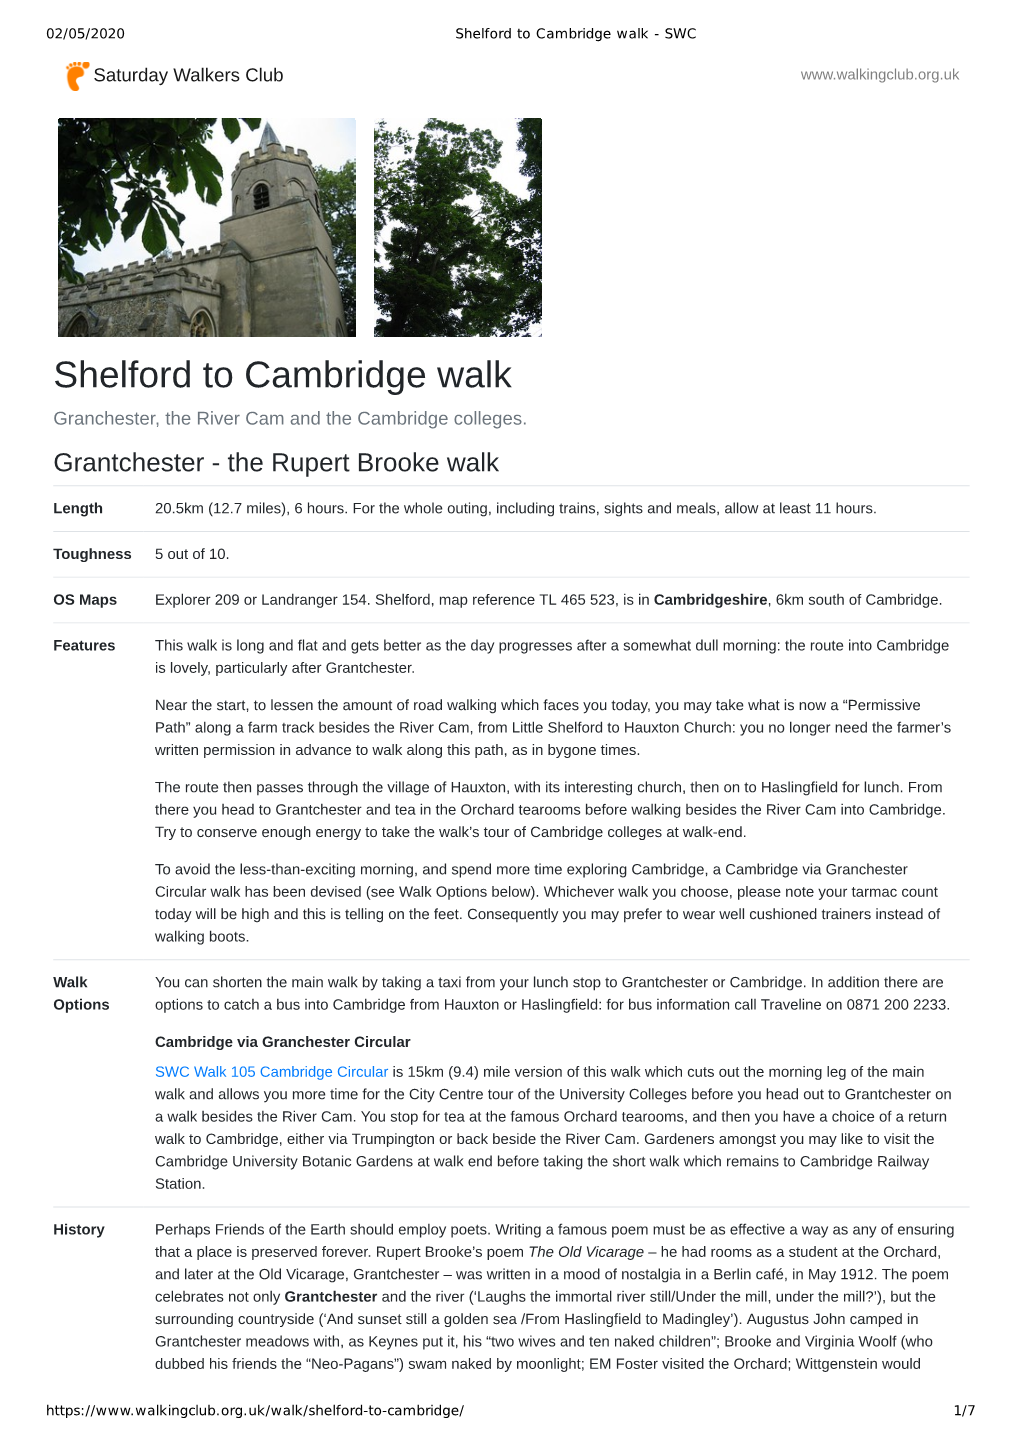 Shelford to Cambridge Walk - SWC